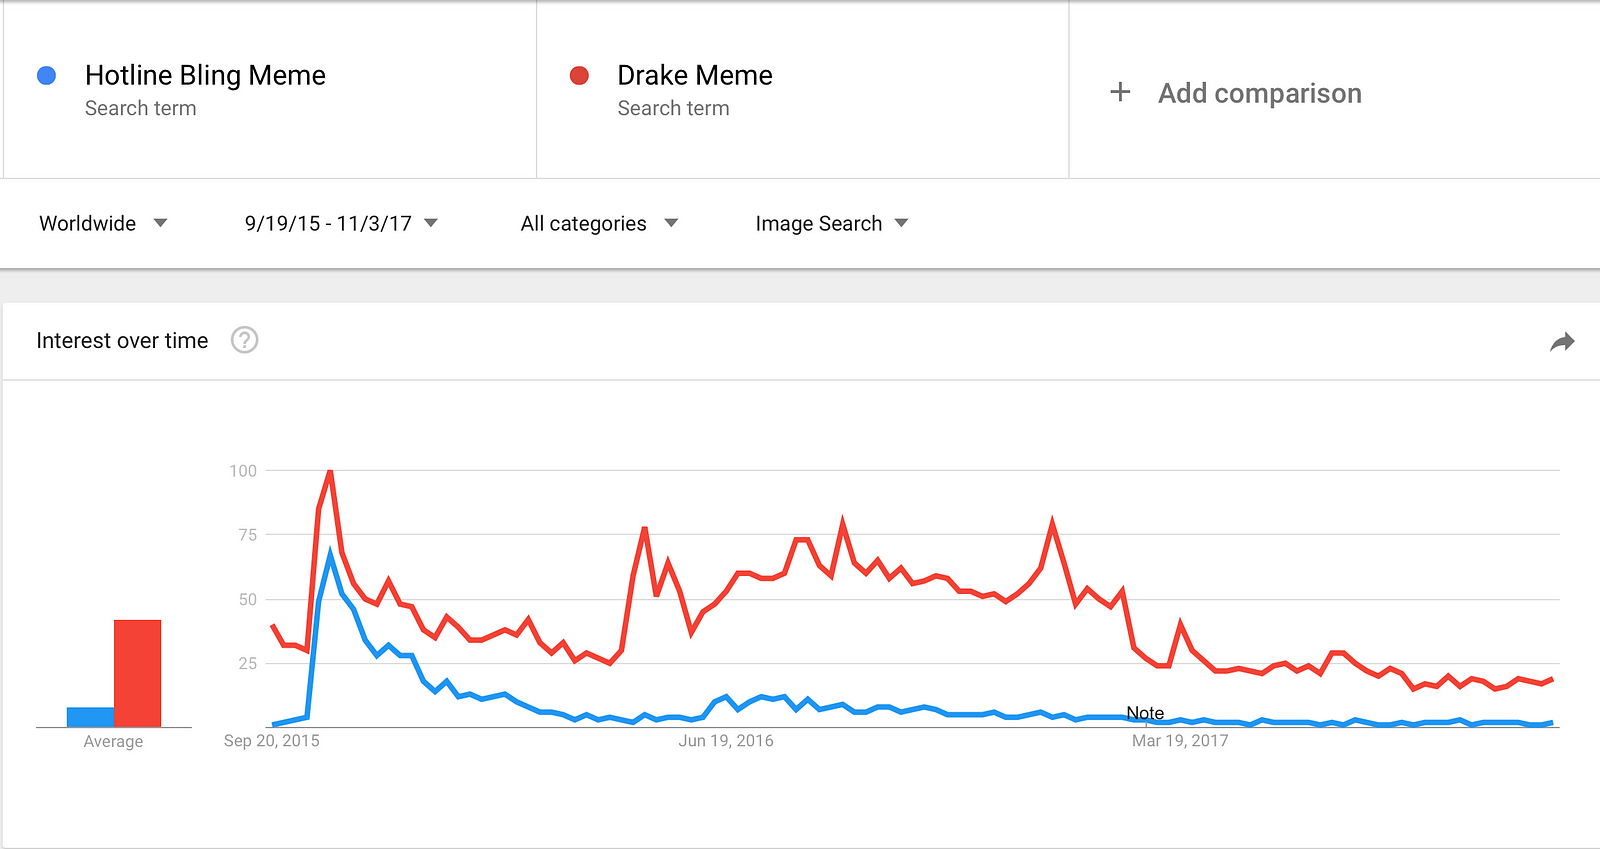 Marketing With Memes Drakes Hotline Bling